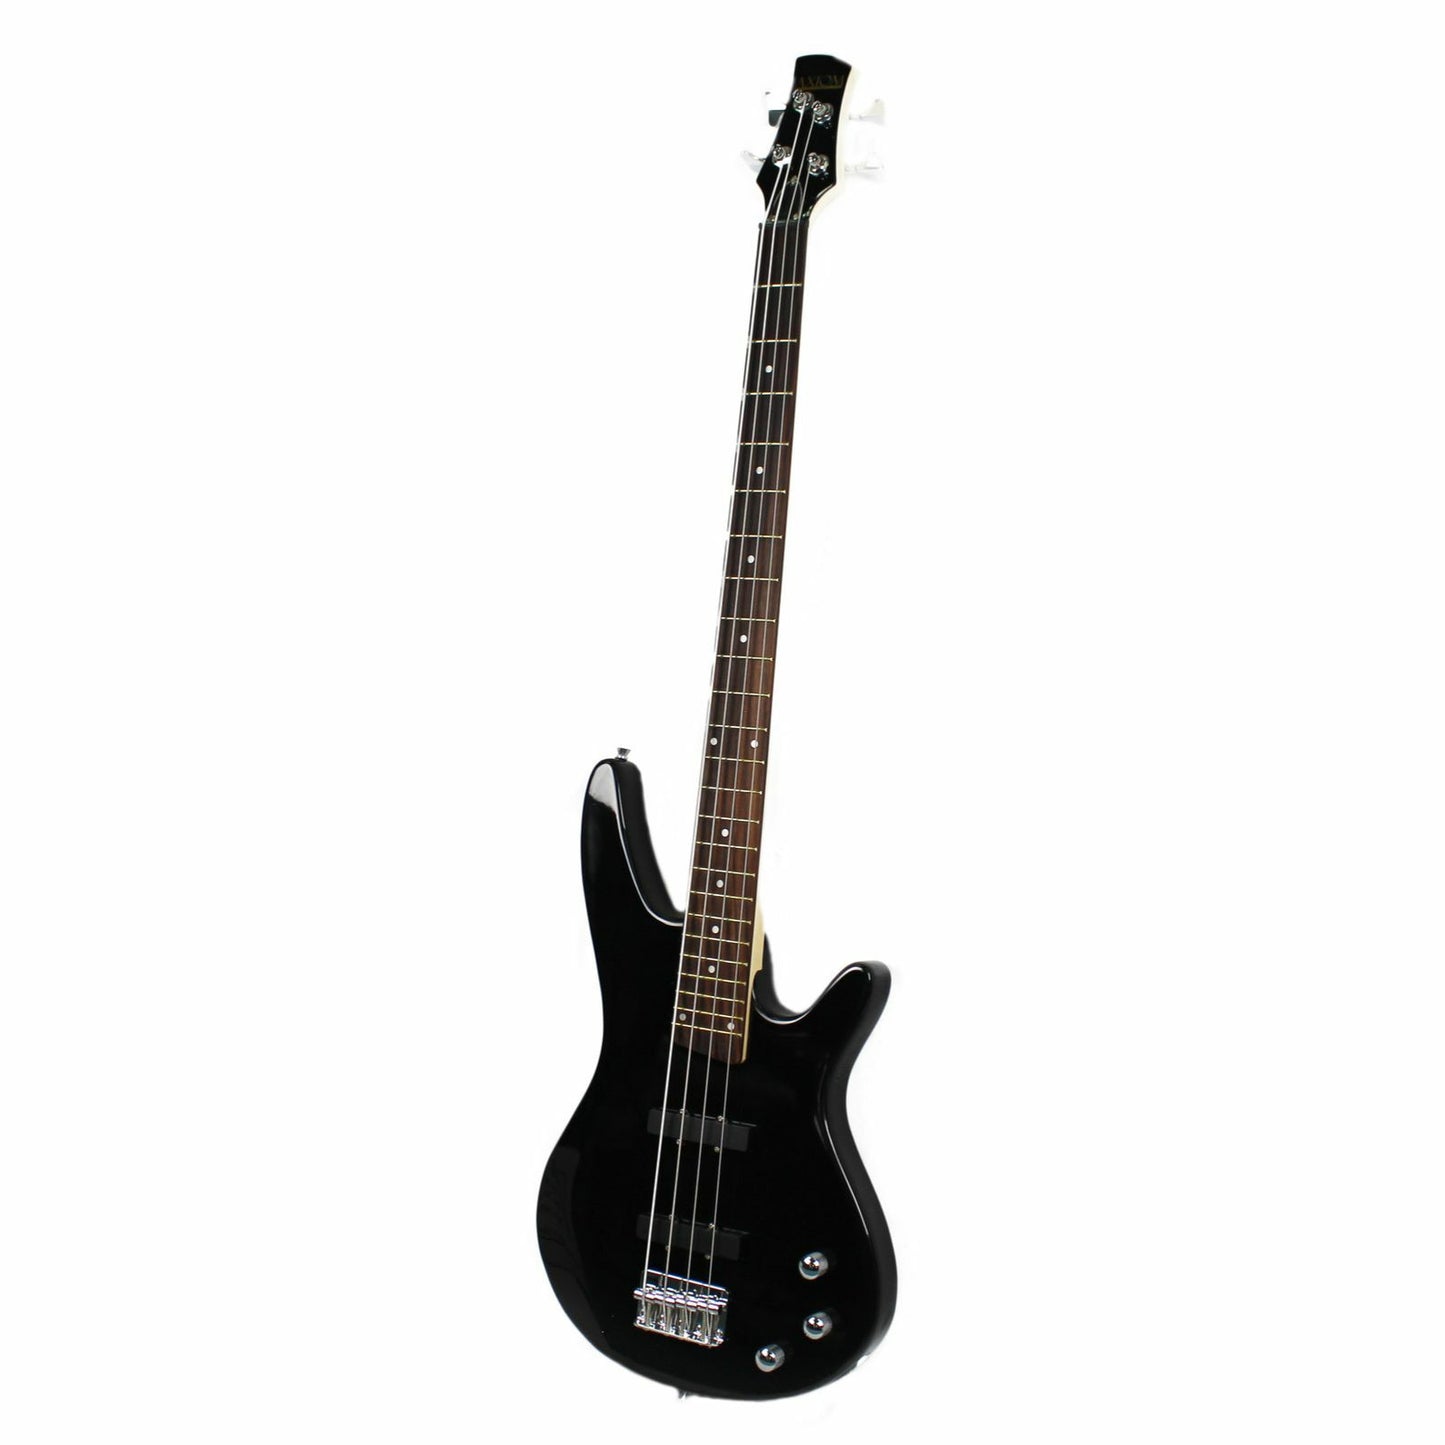 Axiom Defender Bass Guitar - Black